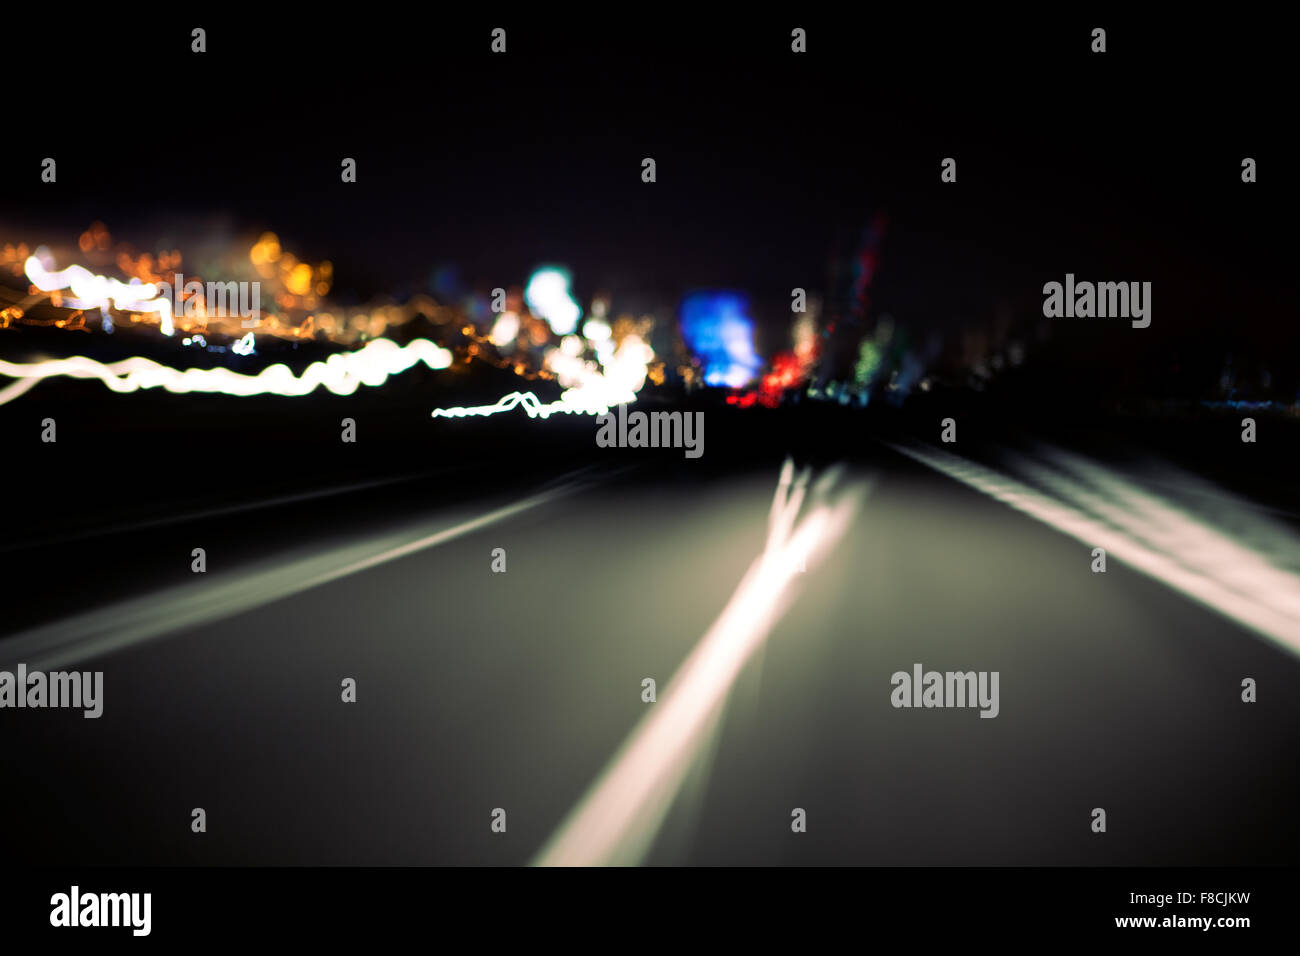 Abstract image of road at night Stock Photo